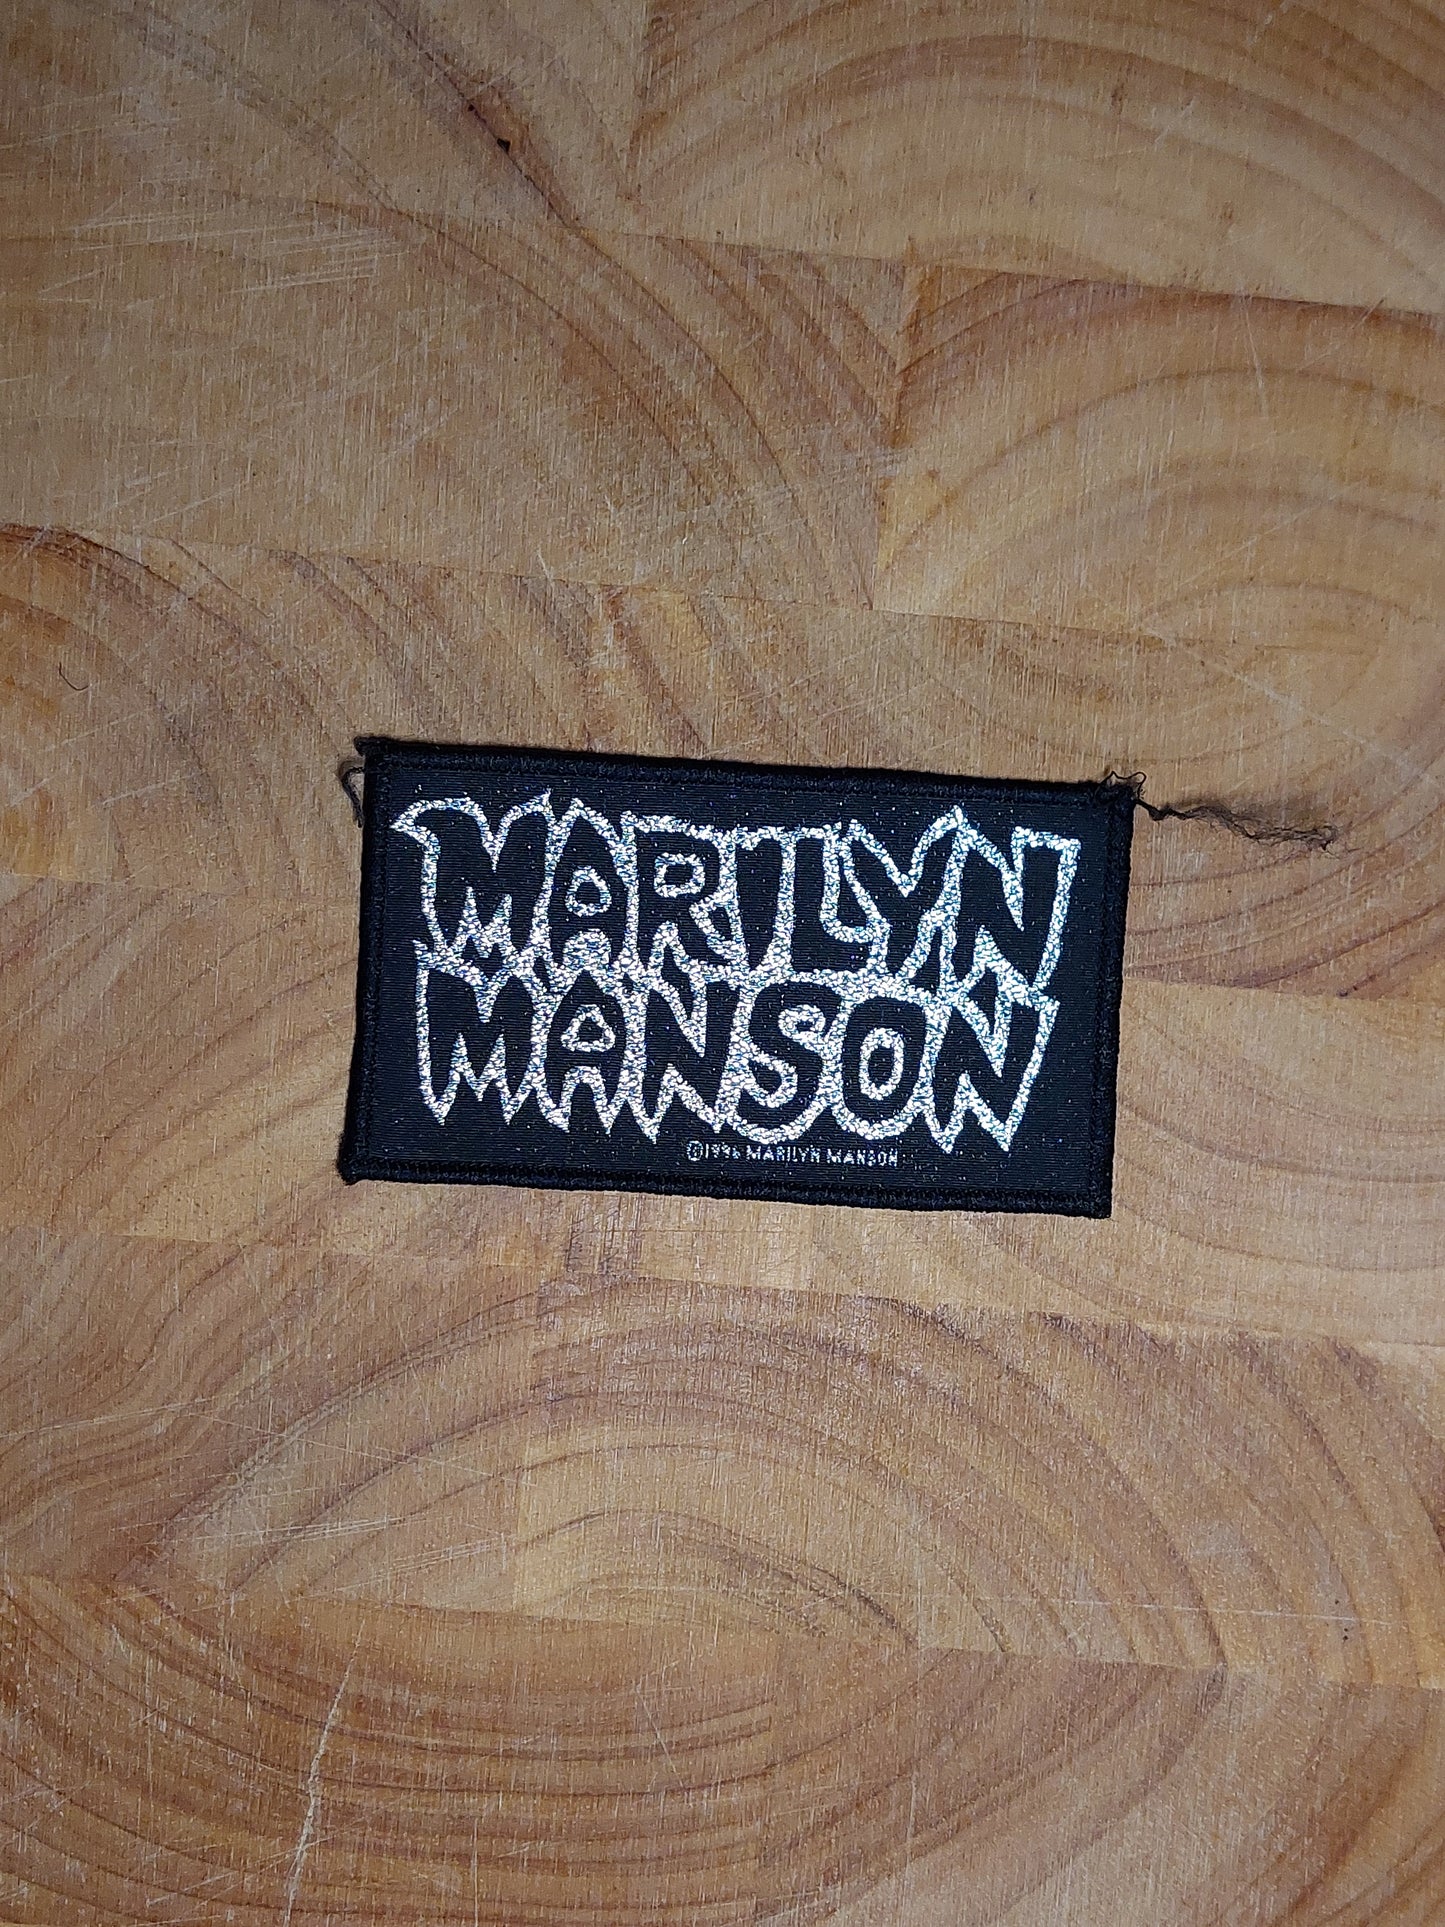 Marilyn manson logo